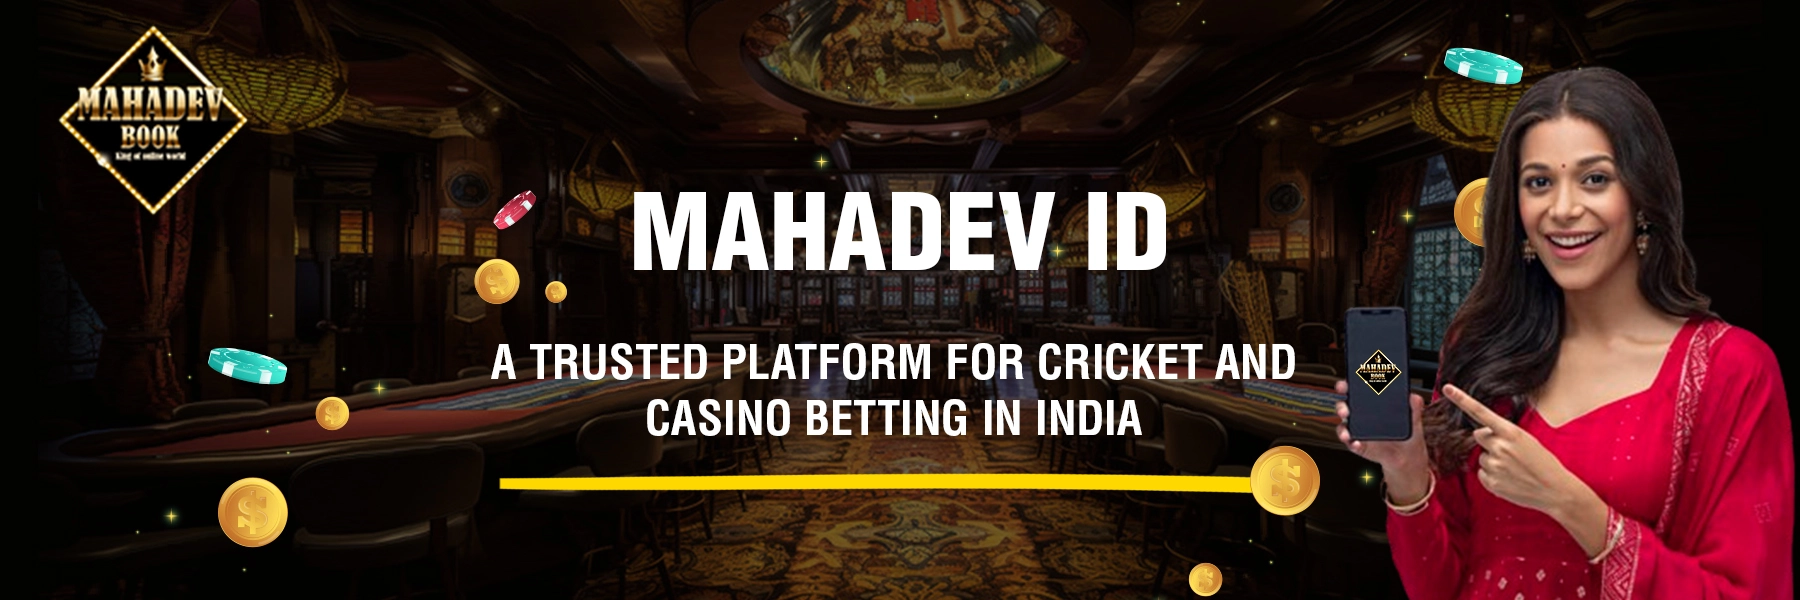 Mahadev ID Trusted Cricket and Casino Betting Platform